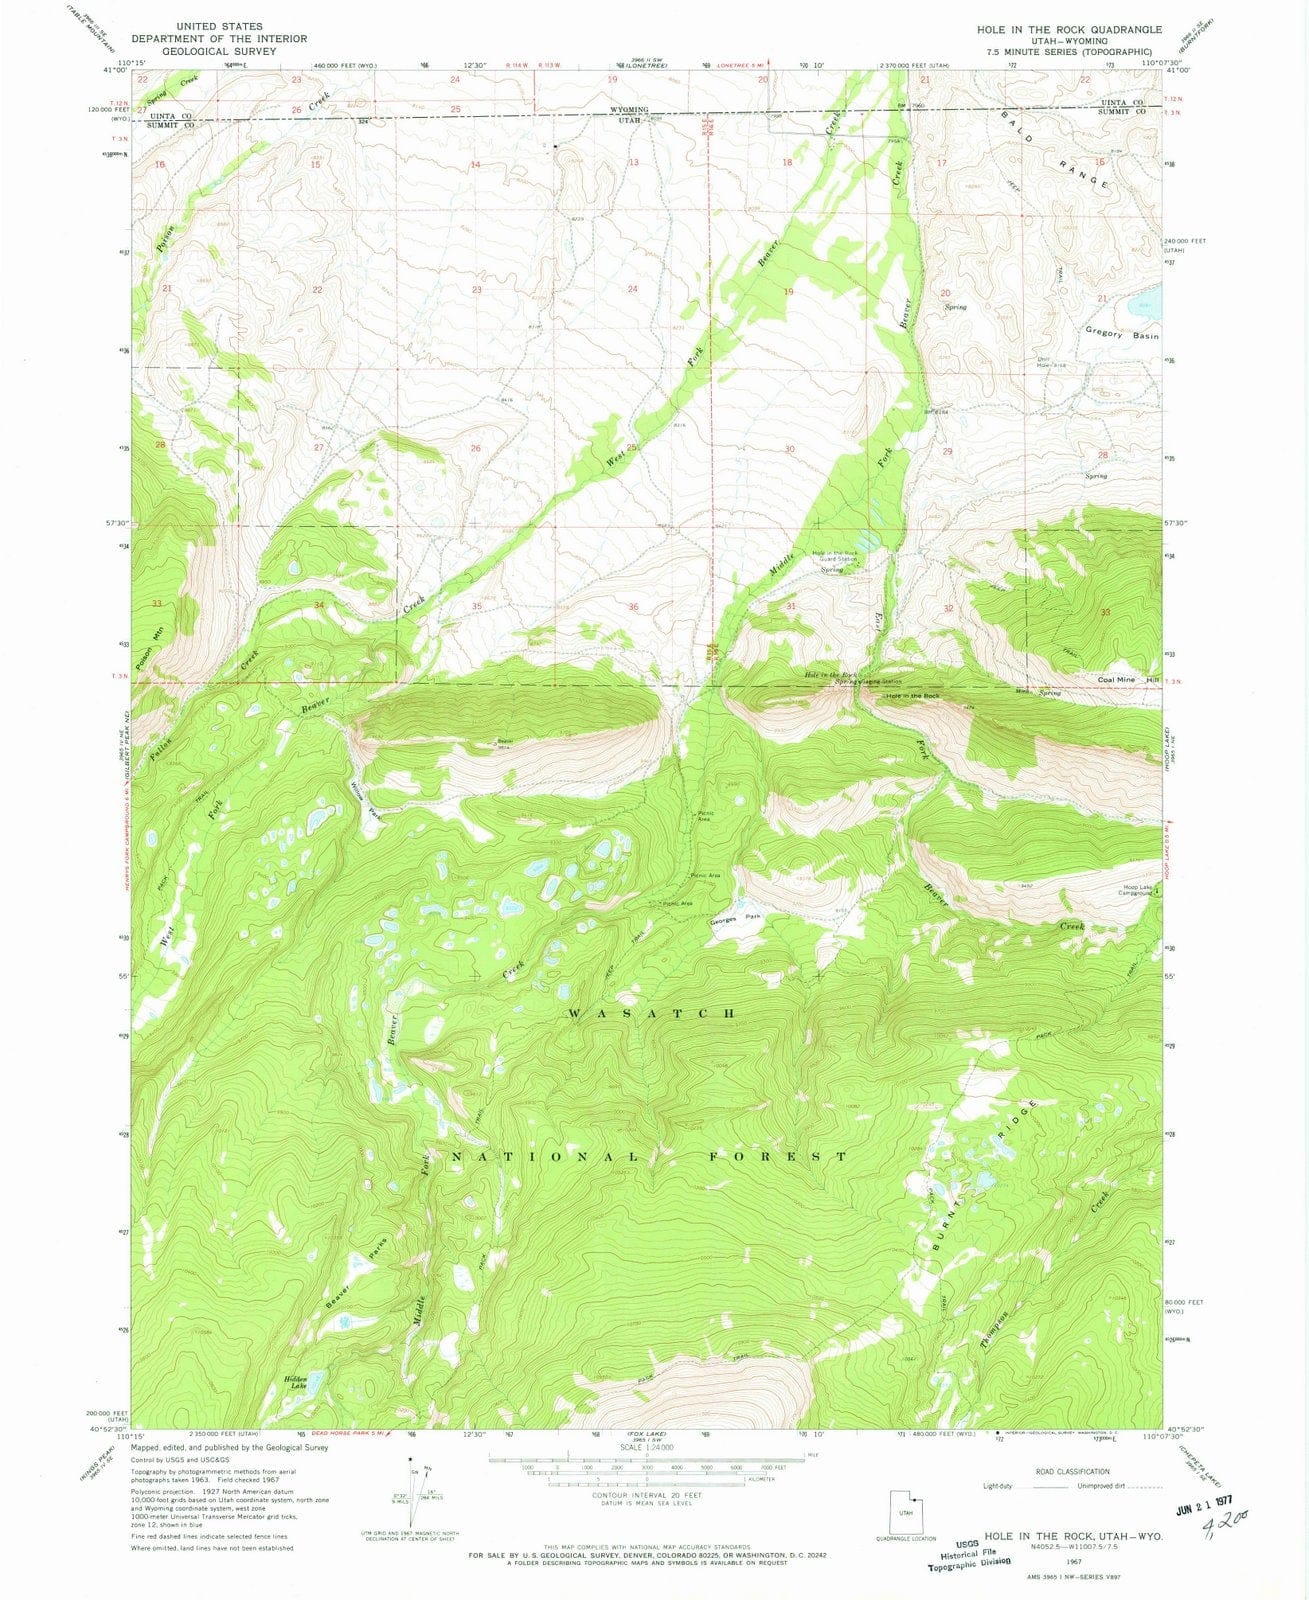 1967 Hole in The Rock, UT - Utah - USGS Topographic Map